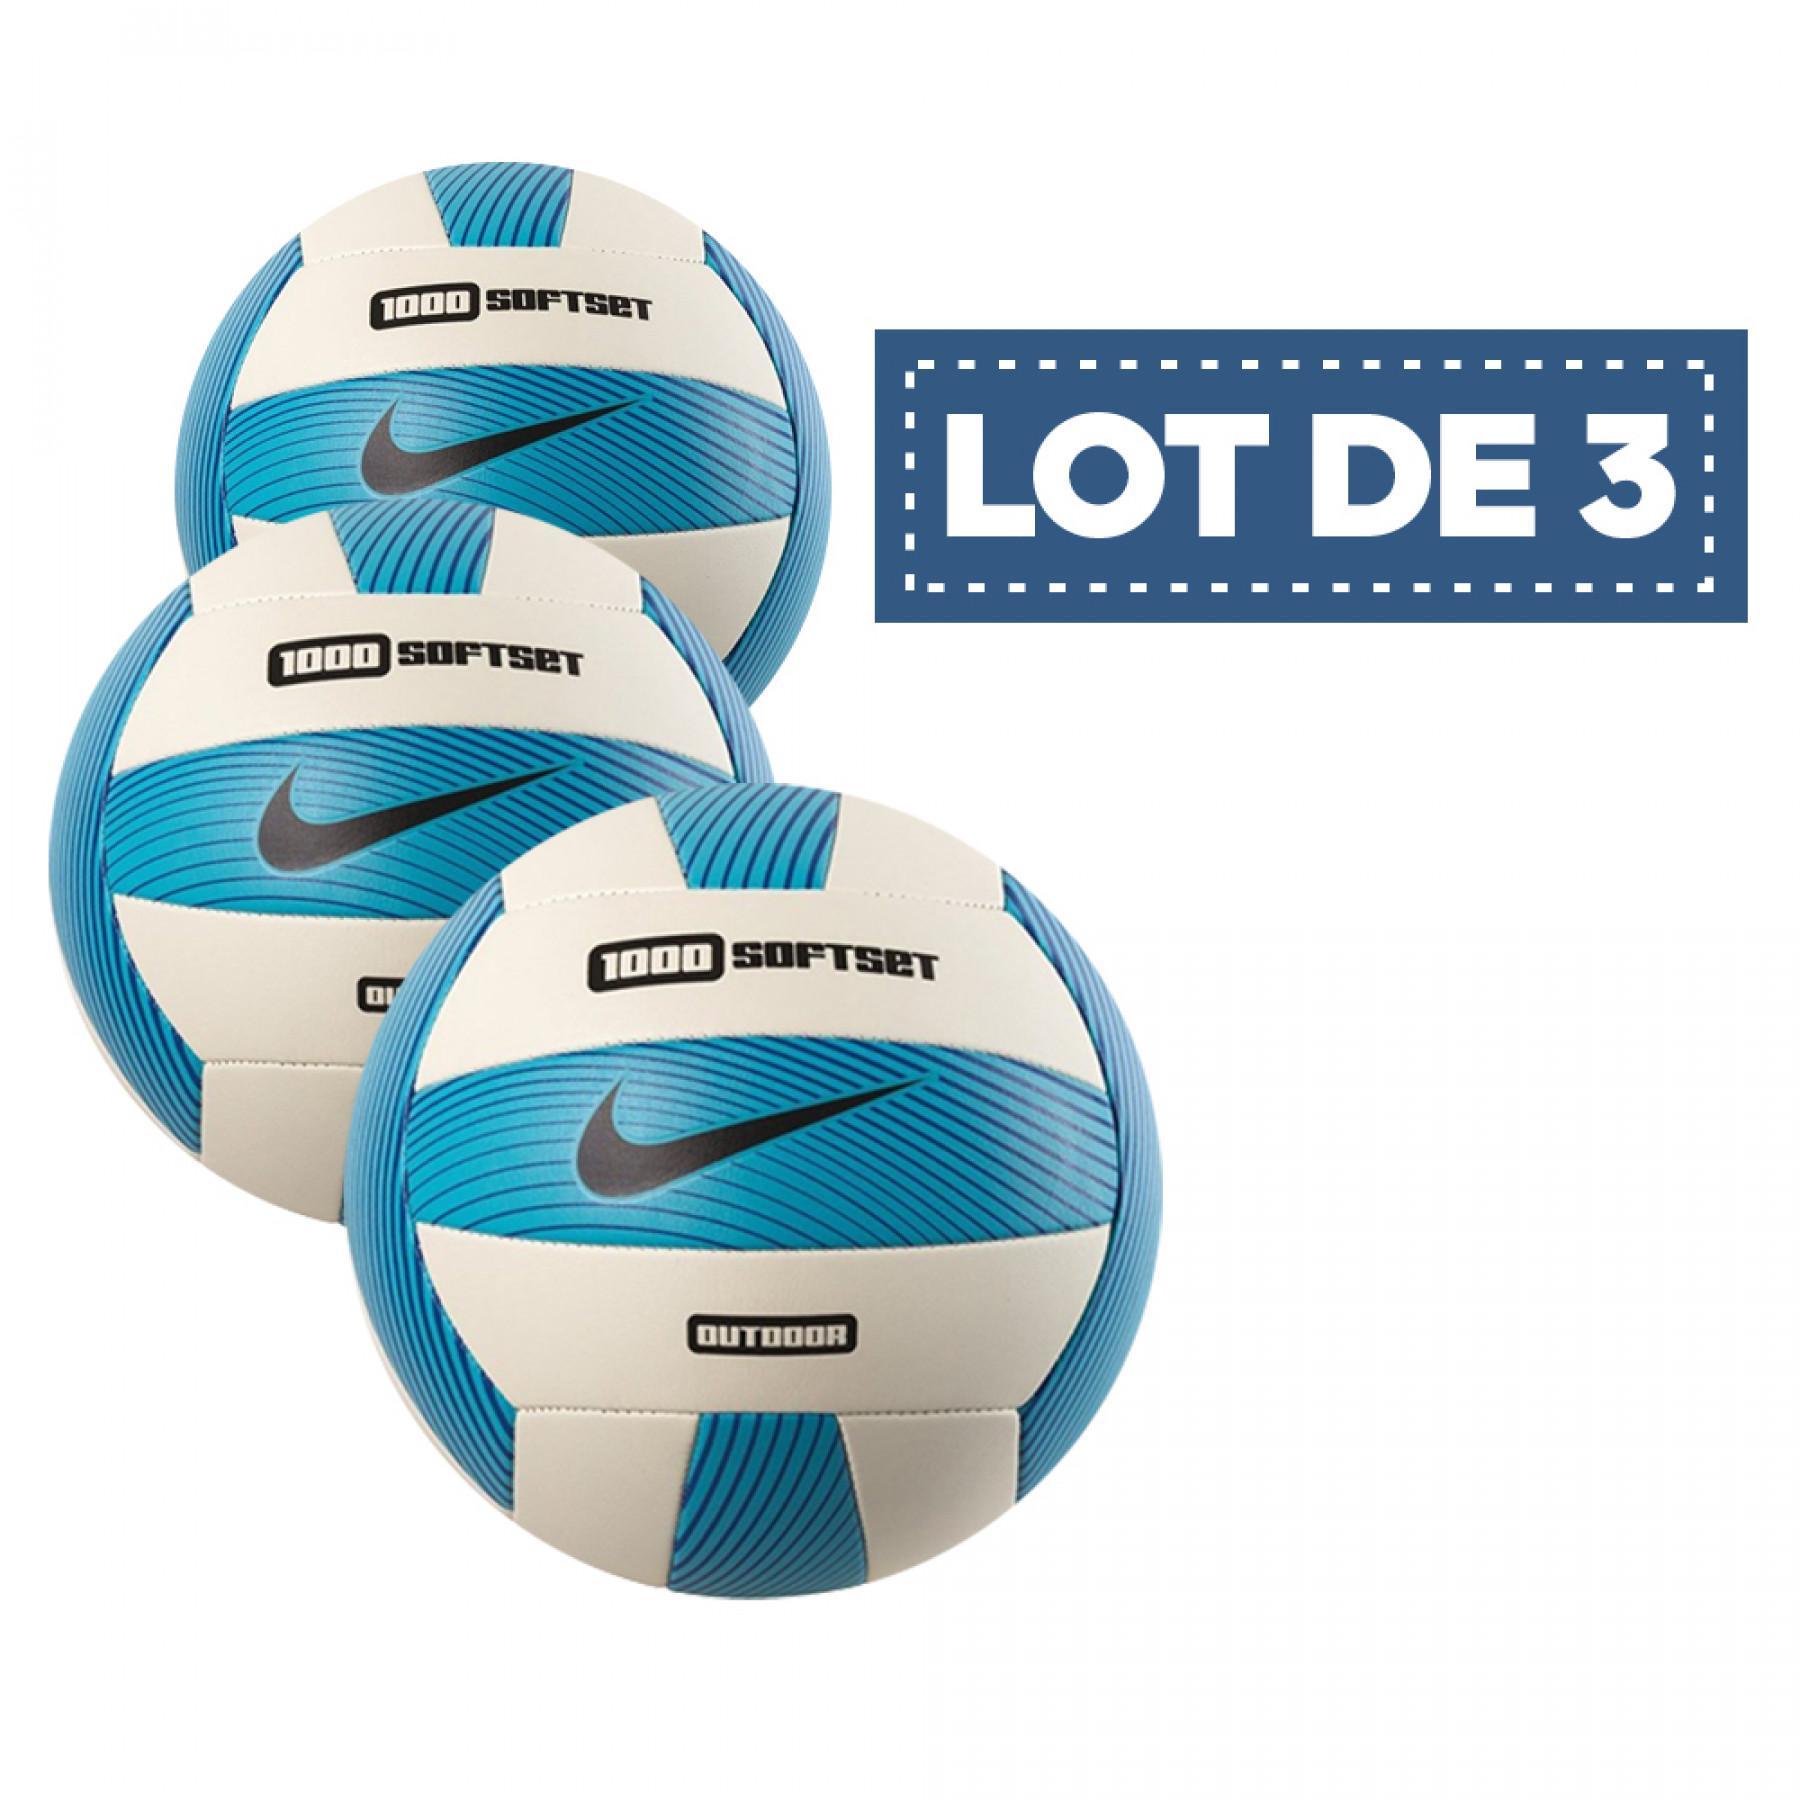 Set di 3 palloncini Nike 1000 softset outdoor bleu/blanc